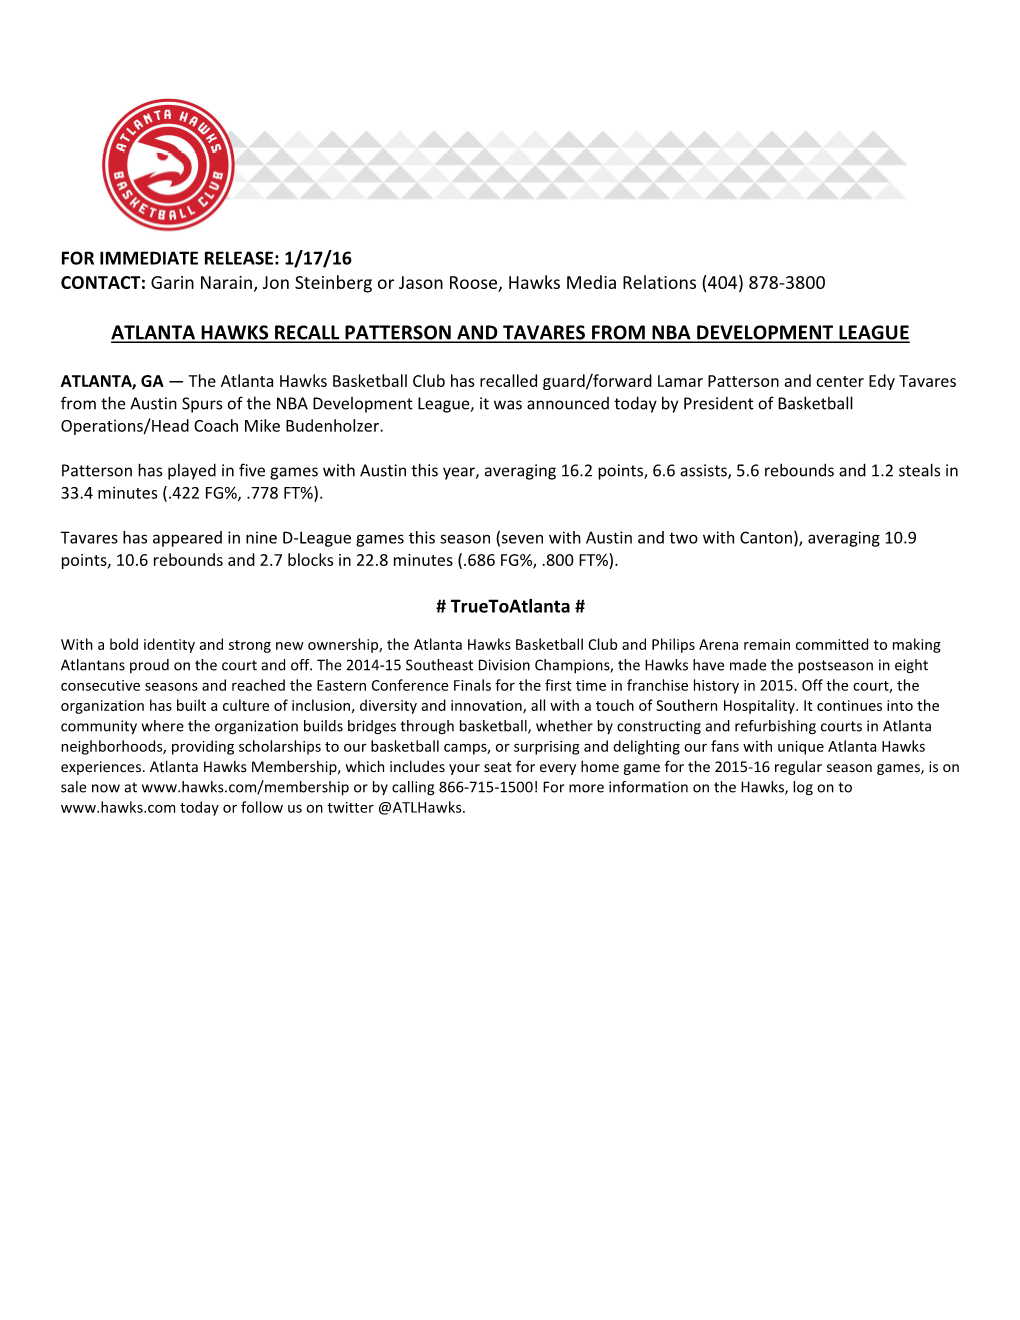 Atlanta Hawks Recall Patterson and Tavares from Nba Development League